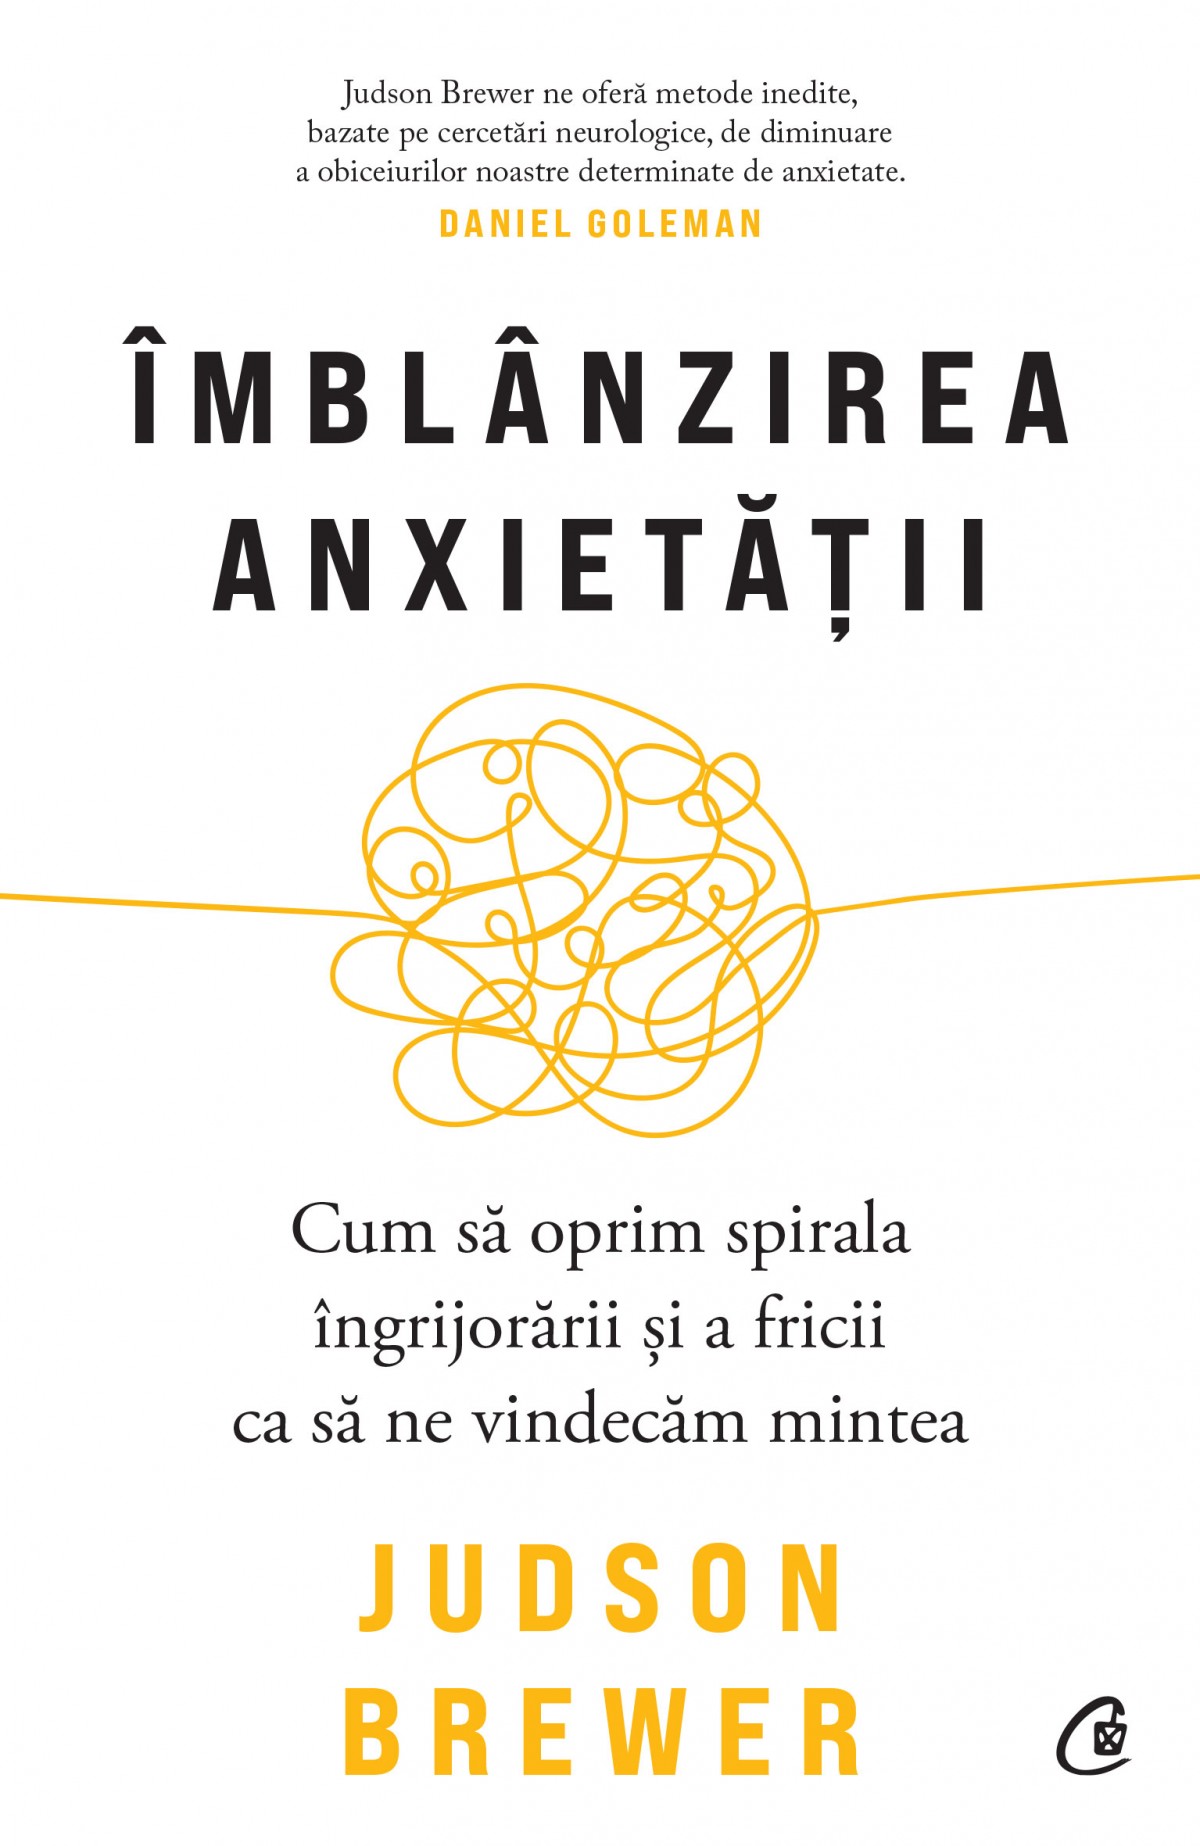 Imblanzirea anxietatii | Judson Brewer carturesti.ro poza bestsellers.ro